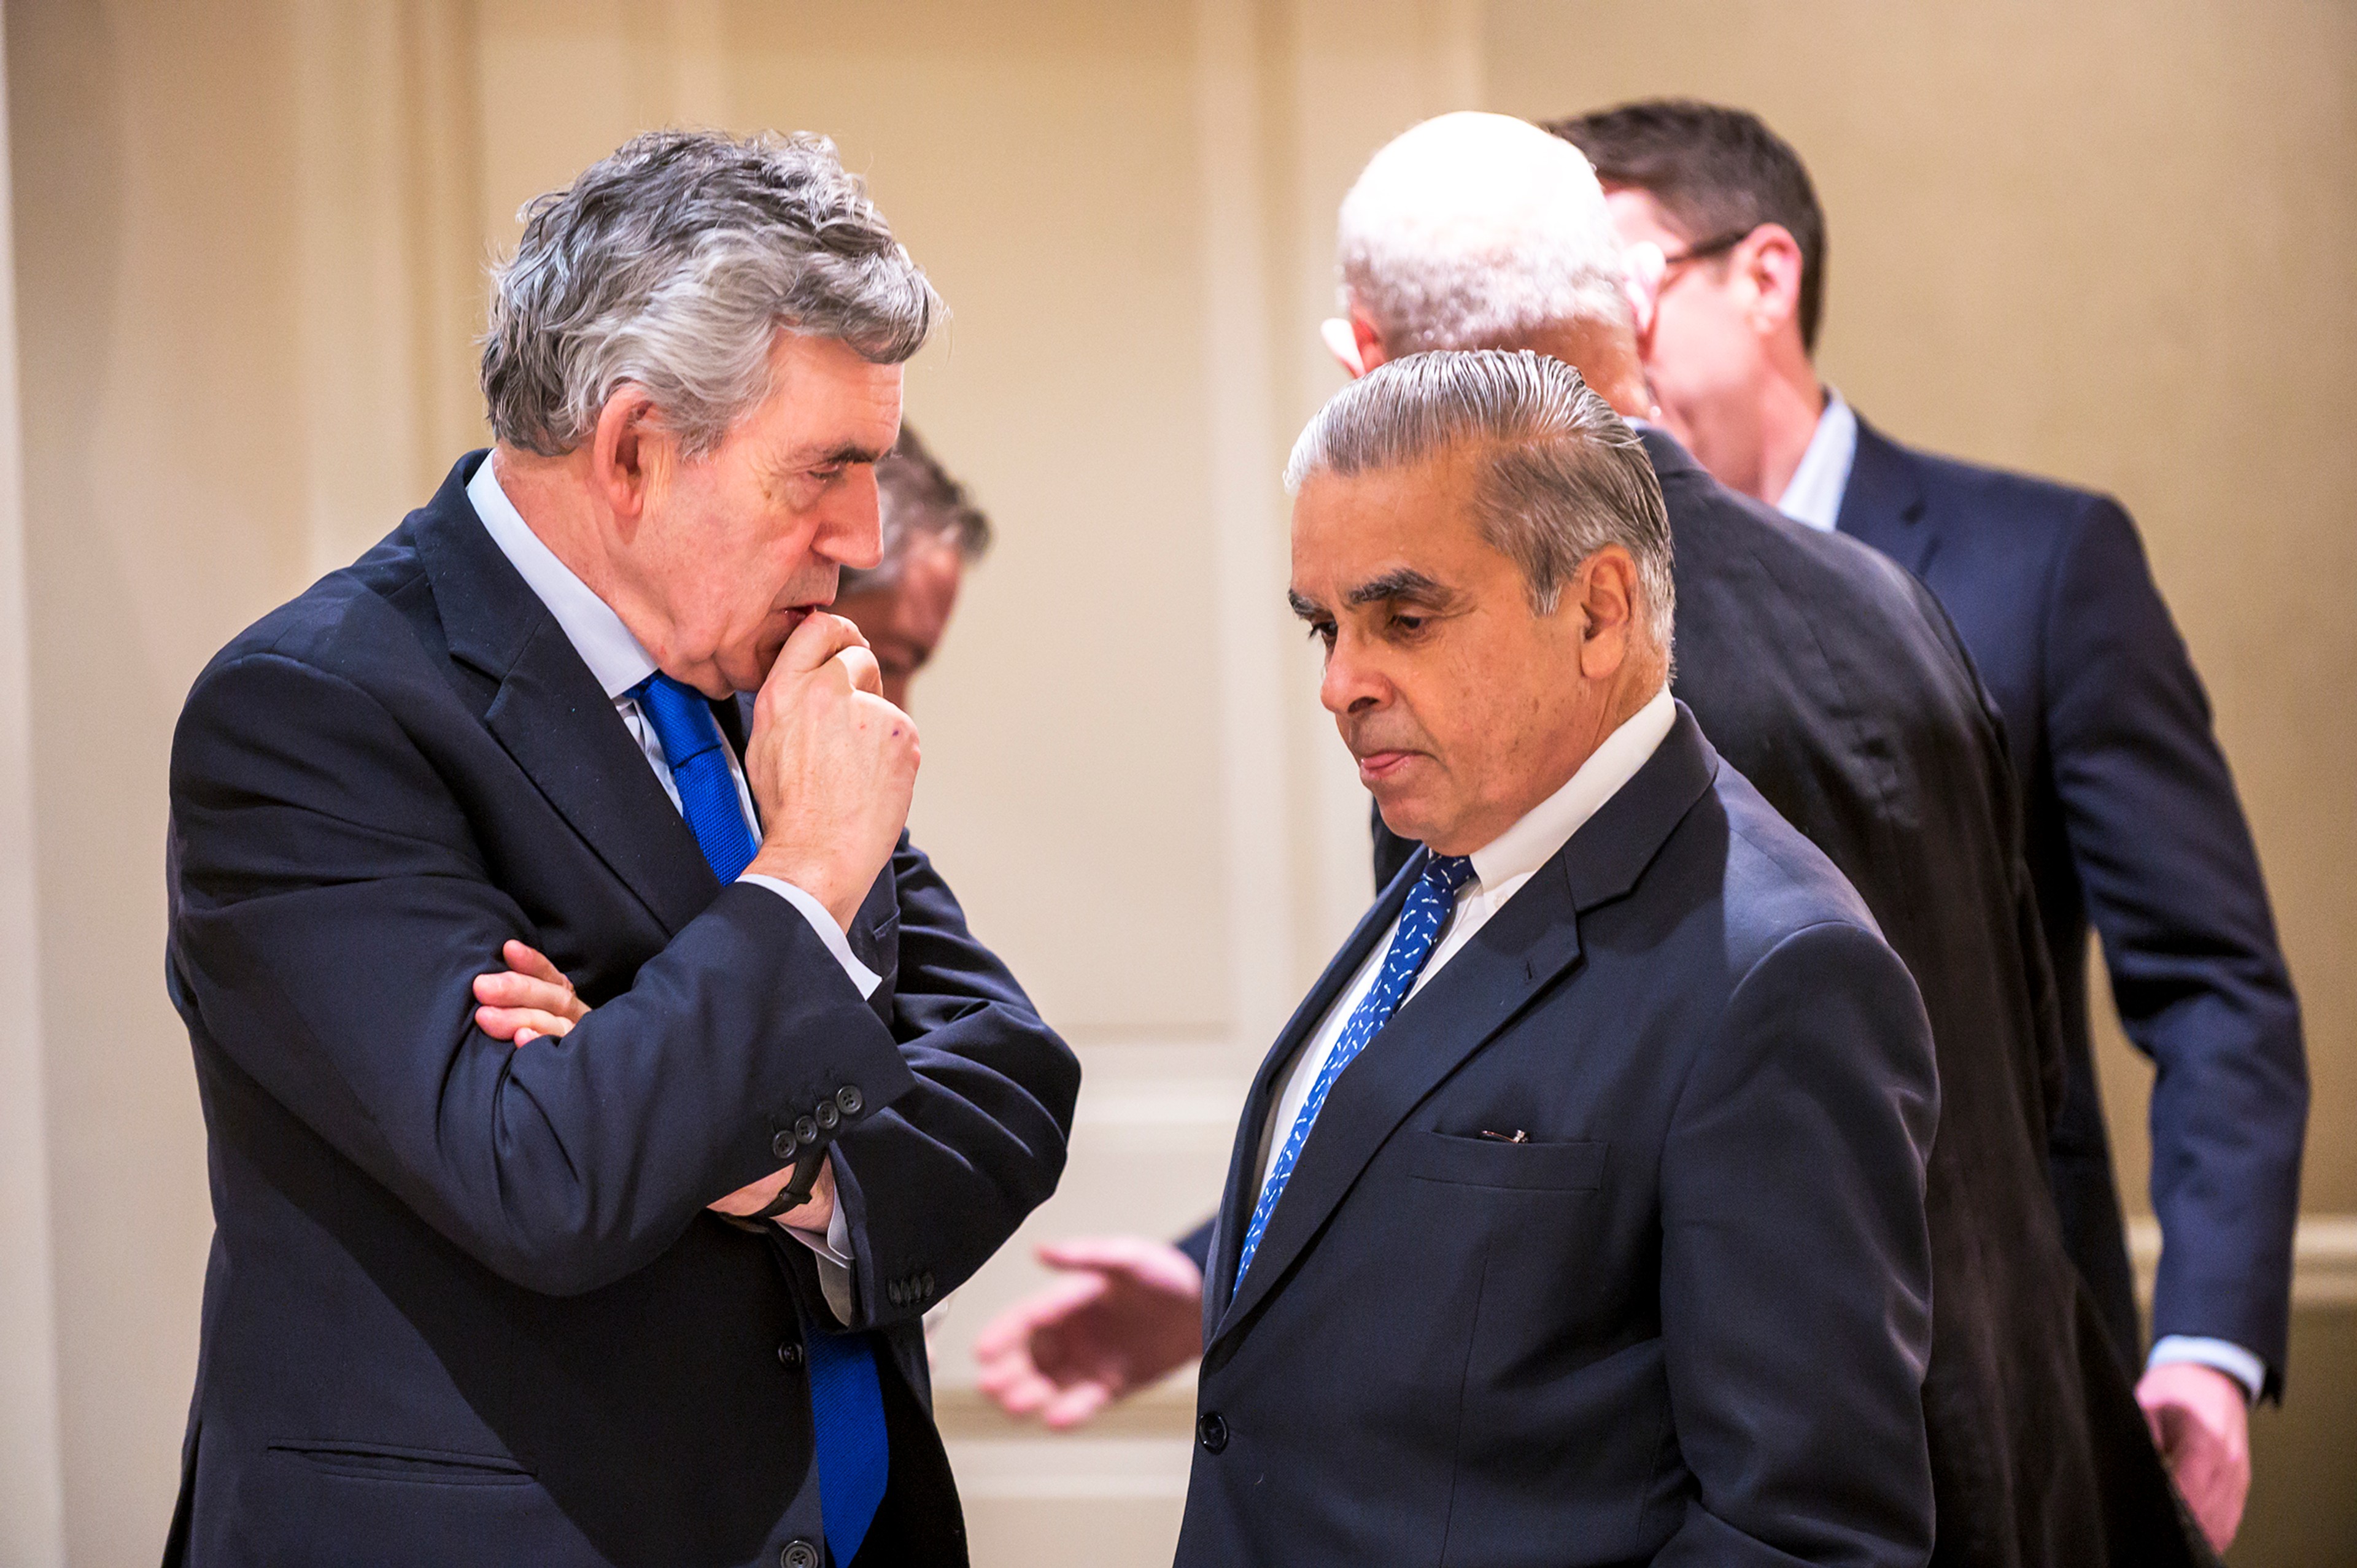 Gordon Brown and Kishore Mahbubani among others at 21st CC Meeting in New York City